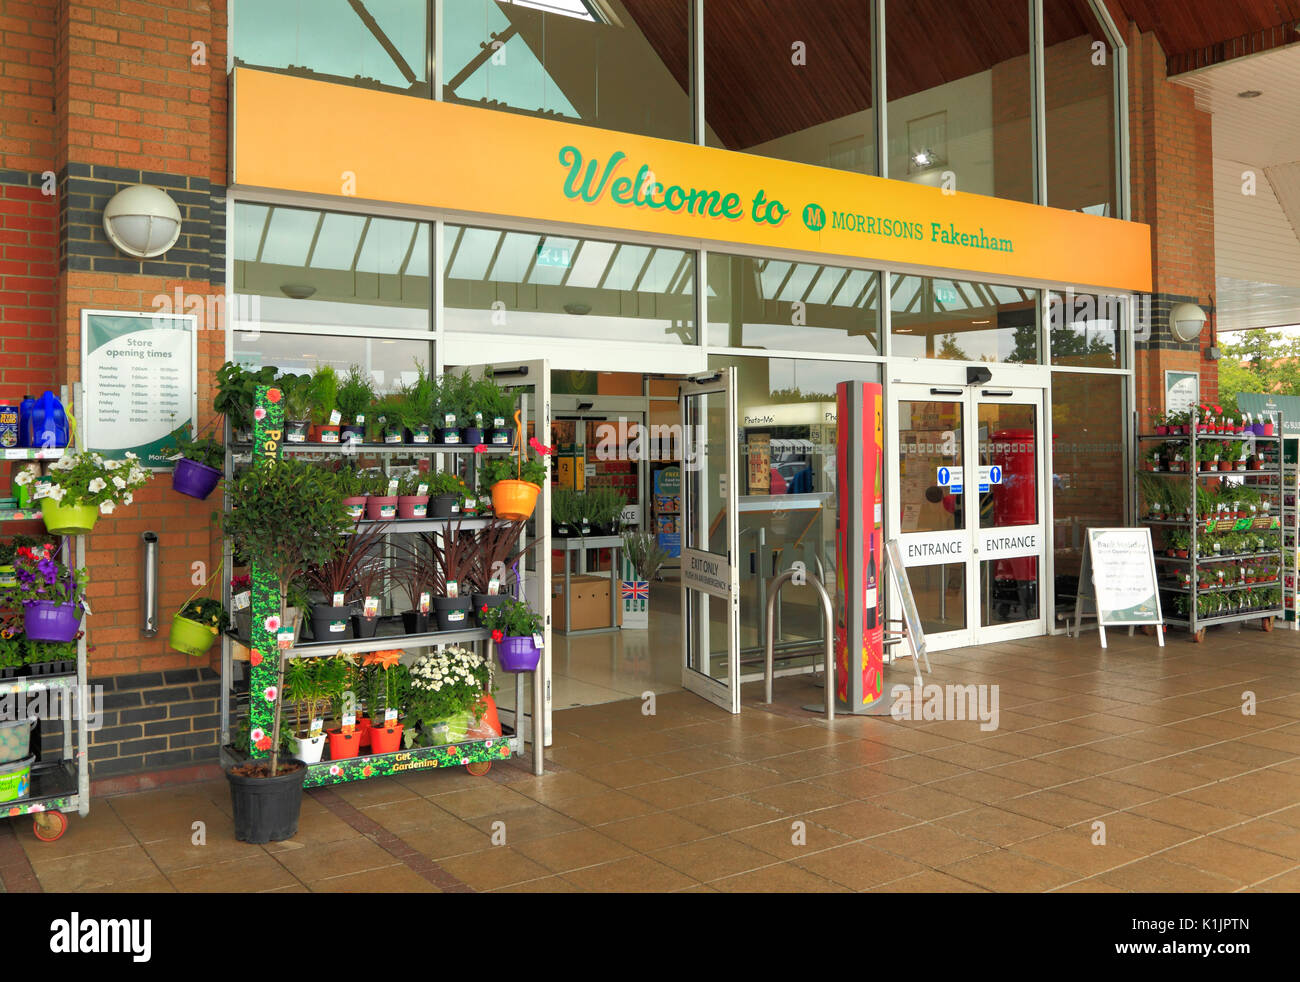 Supermercado Morrison, entrada, vestíbulo, Fakenham, Norfolk, Inglaterra, Reino Unido, los supermercados ingleses, almacenar, almacenes Foto de stock